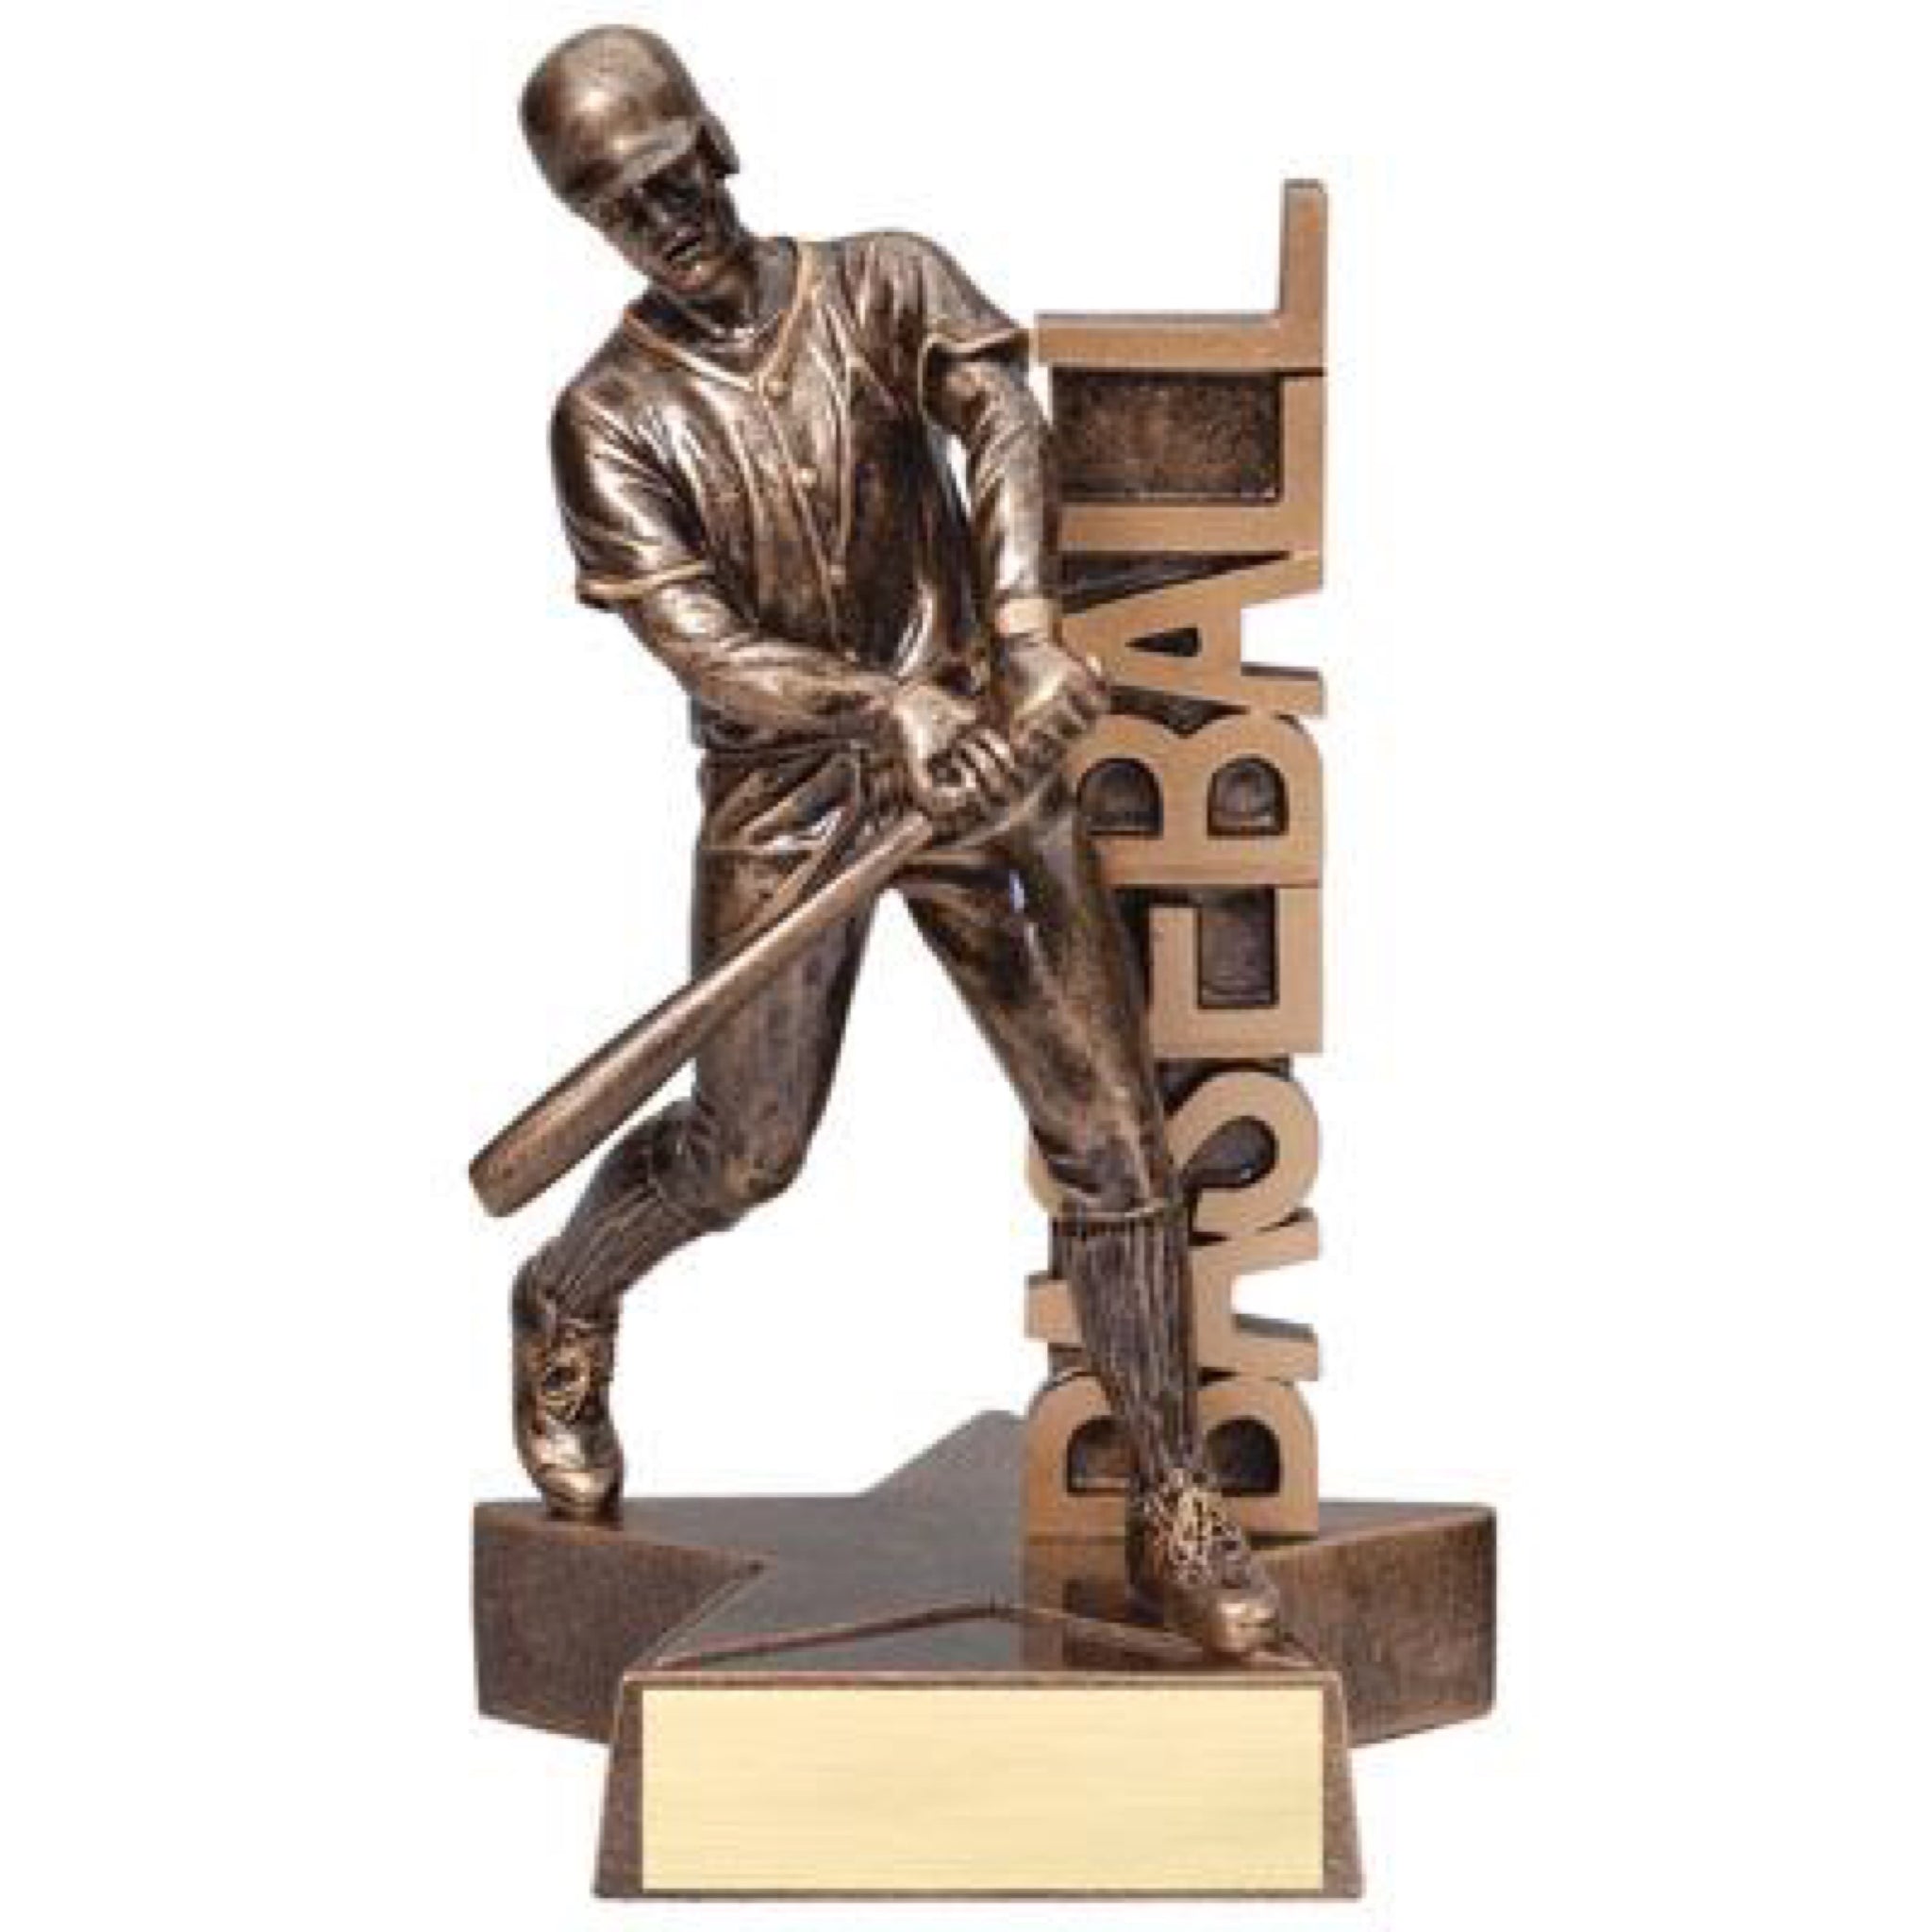 Bronze billboard baseball trophy featuring a star shaped base, a baseball player swinging a bat, and the word "BASEBALL" vertically displayed.